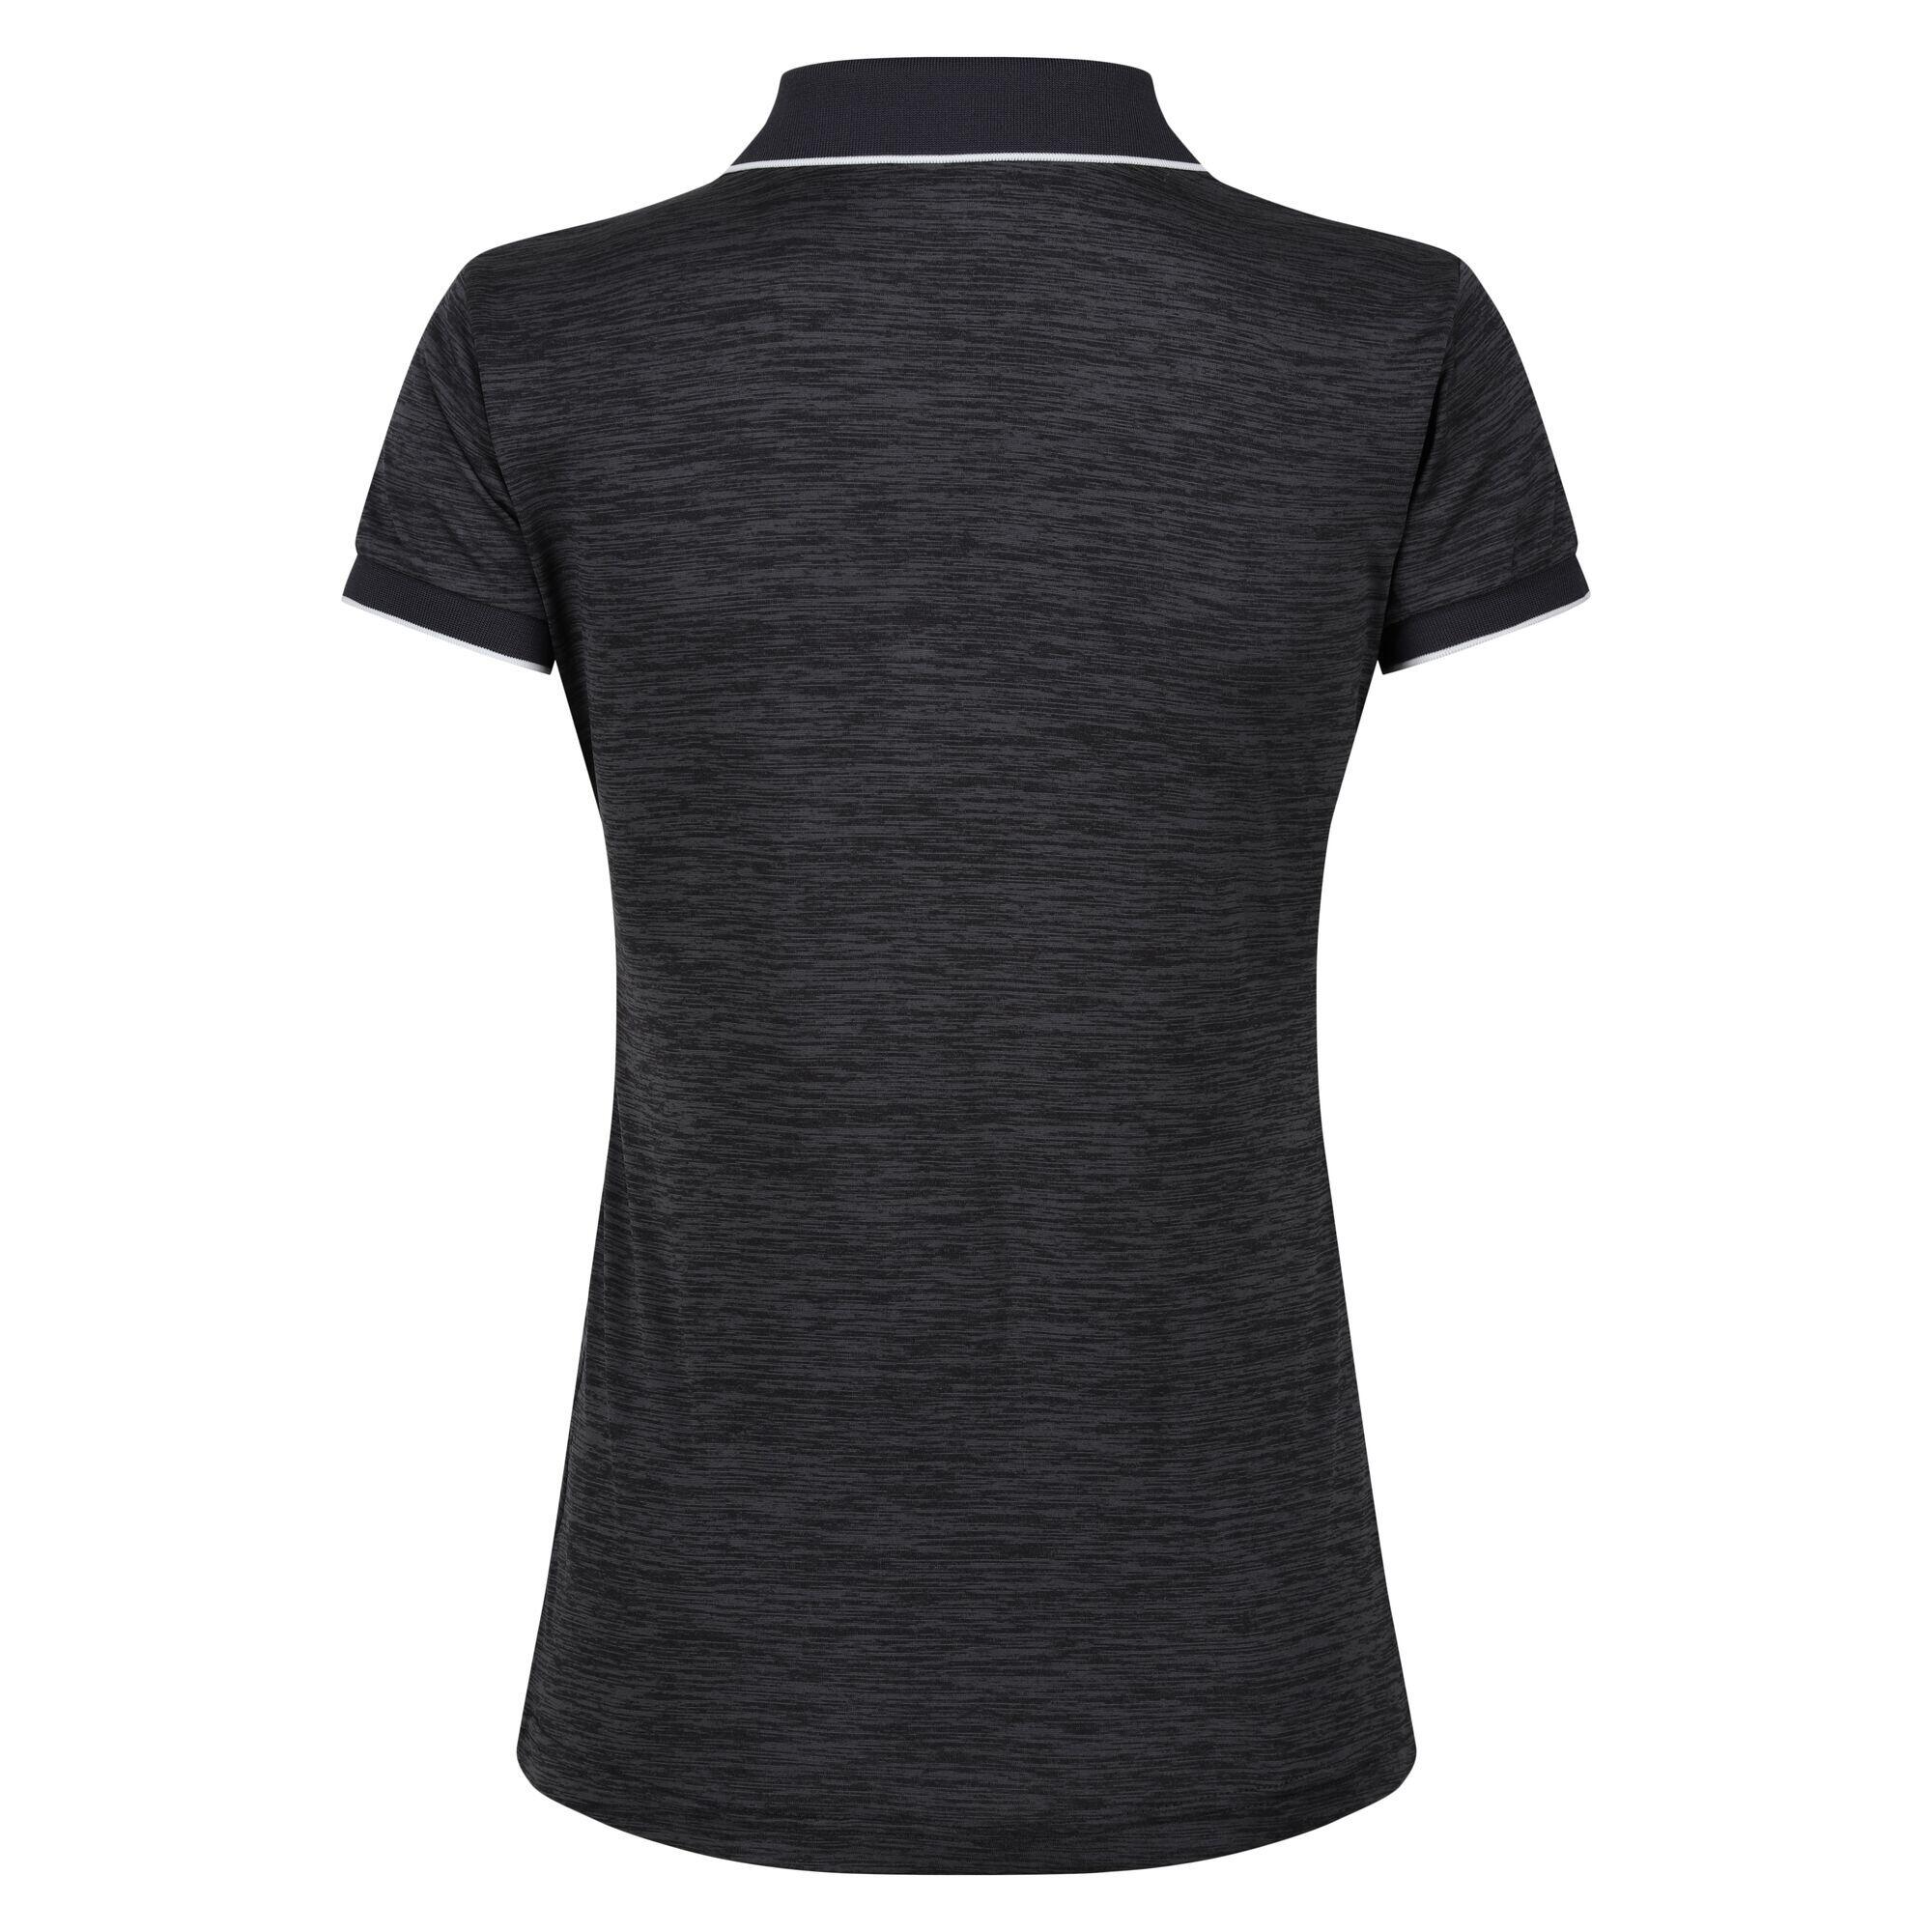 Remex II Women's Walking Short Sleeve T-Shirt - Black 6/6